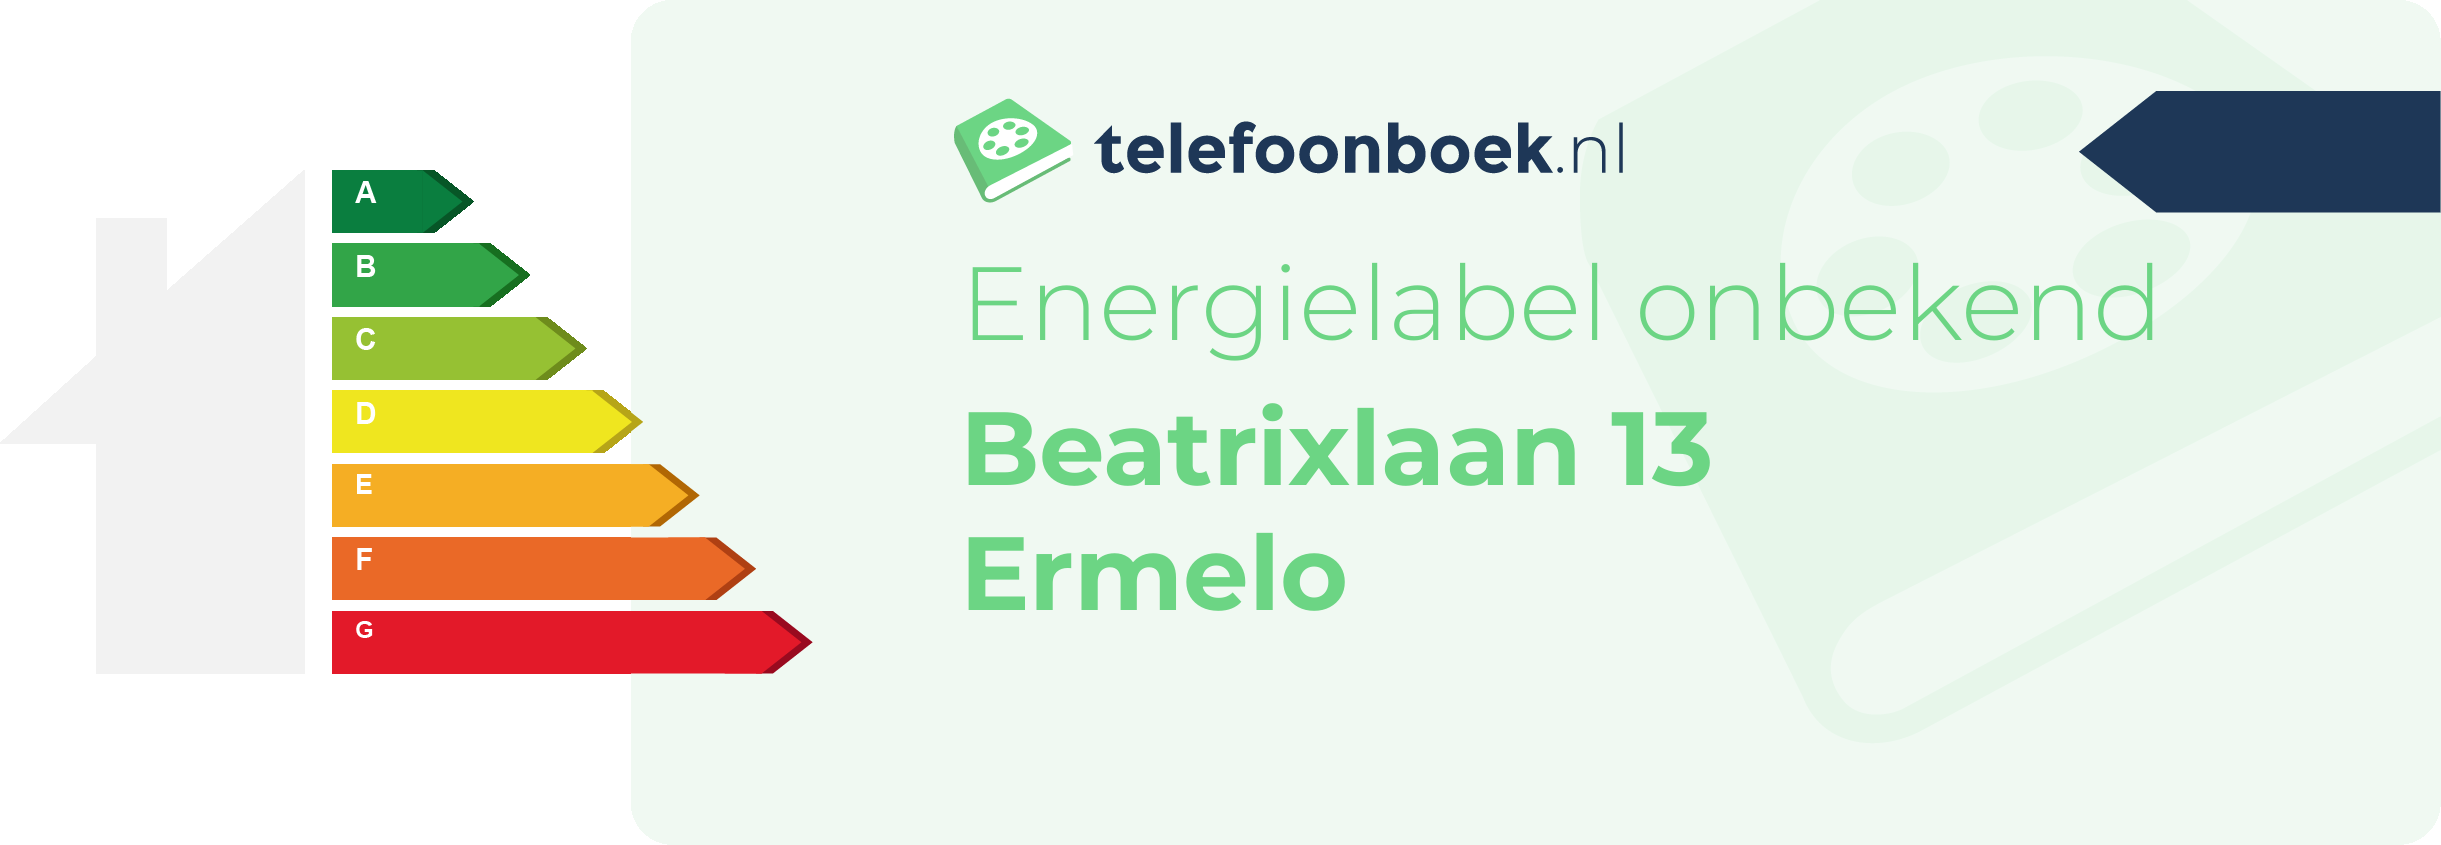 Energielabel Beatrixlaan 13 Ermelo